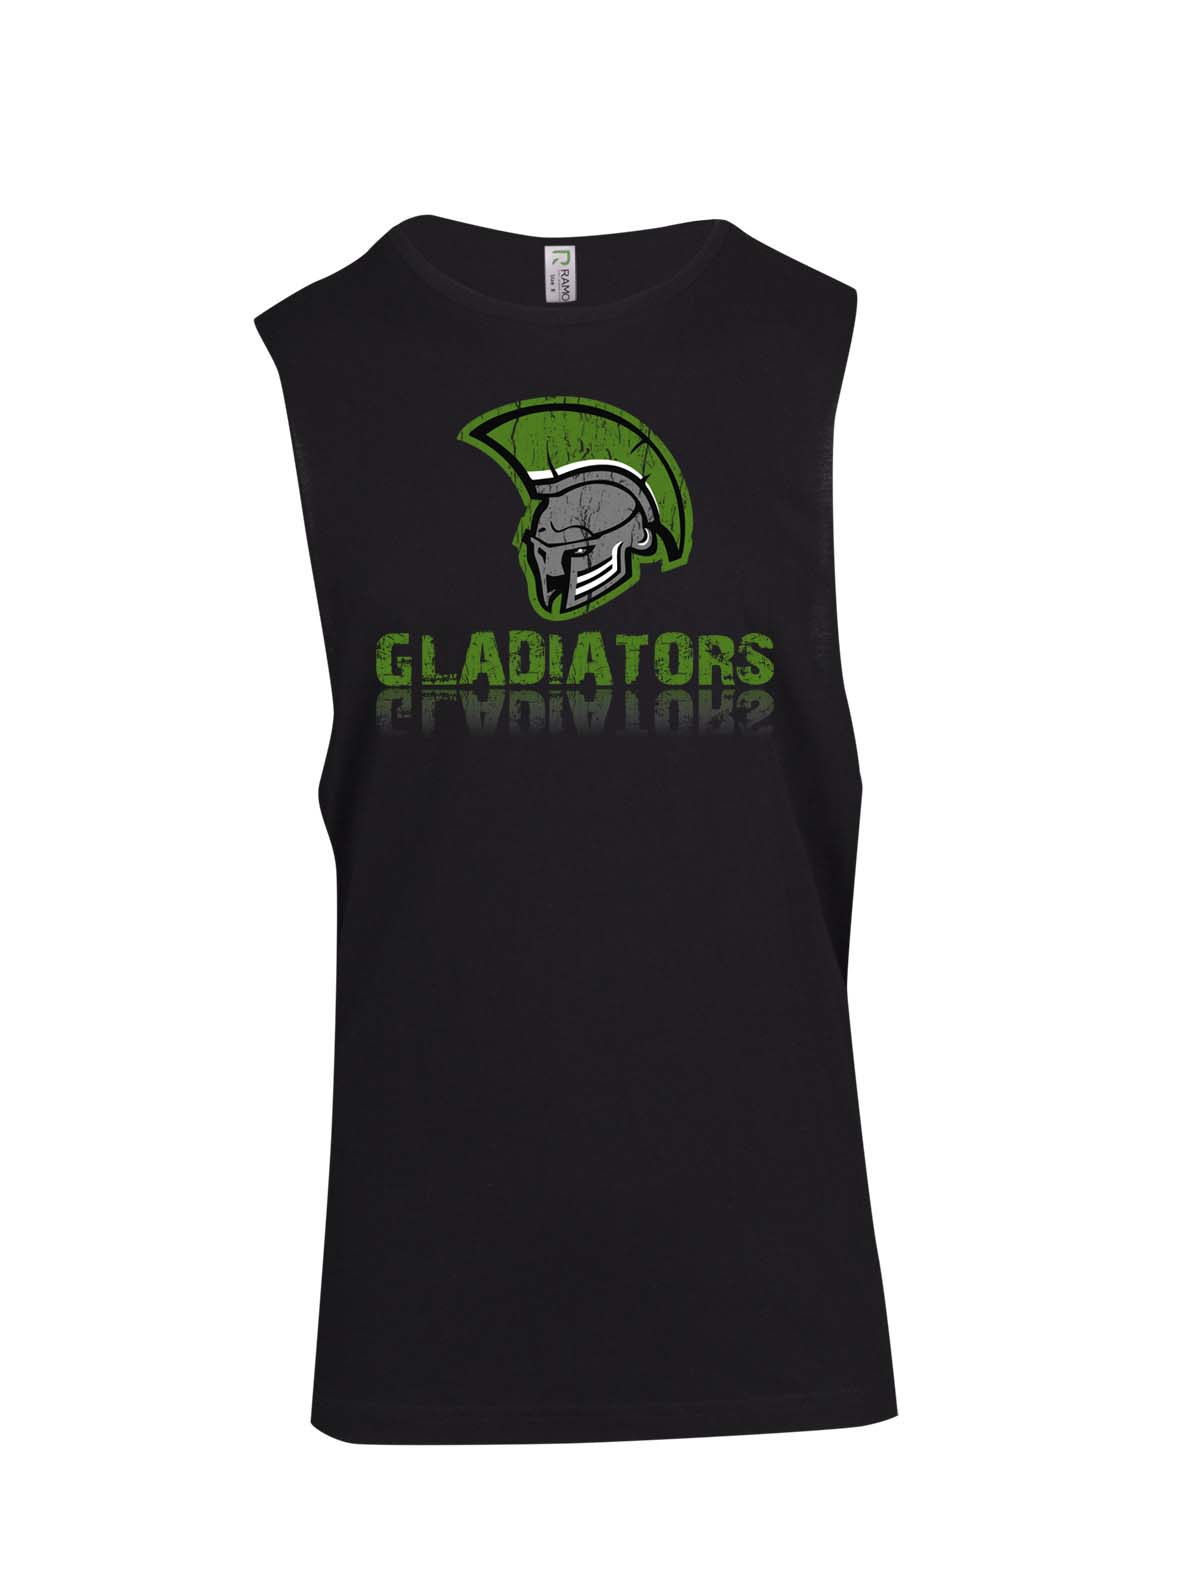 Gladiators Helmet logo Muscle T - Ladies